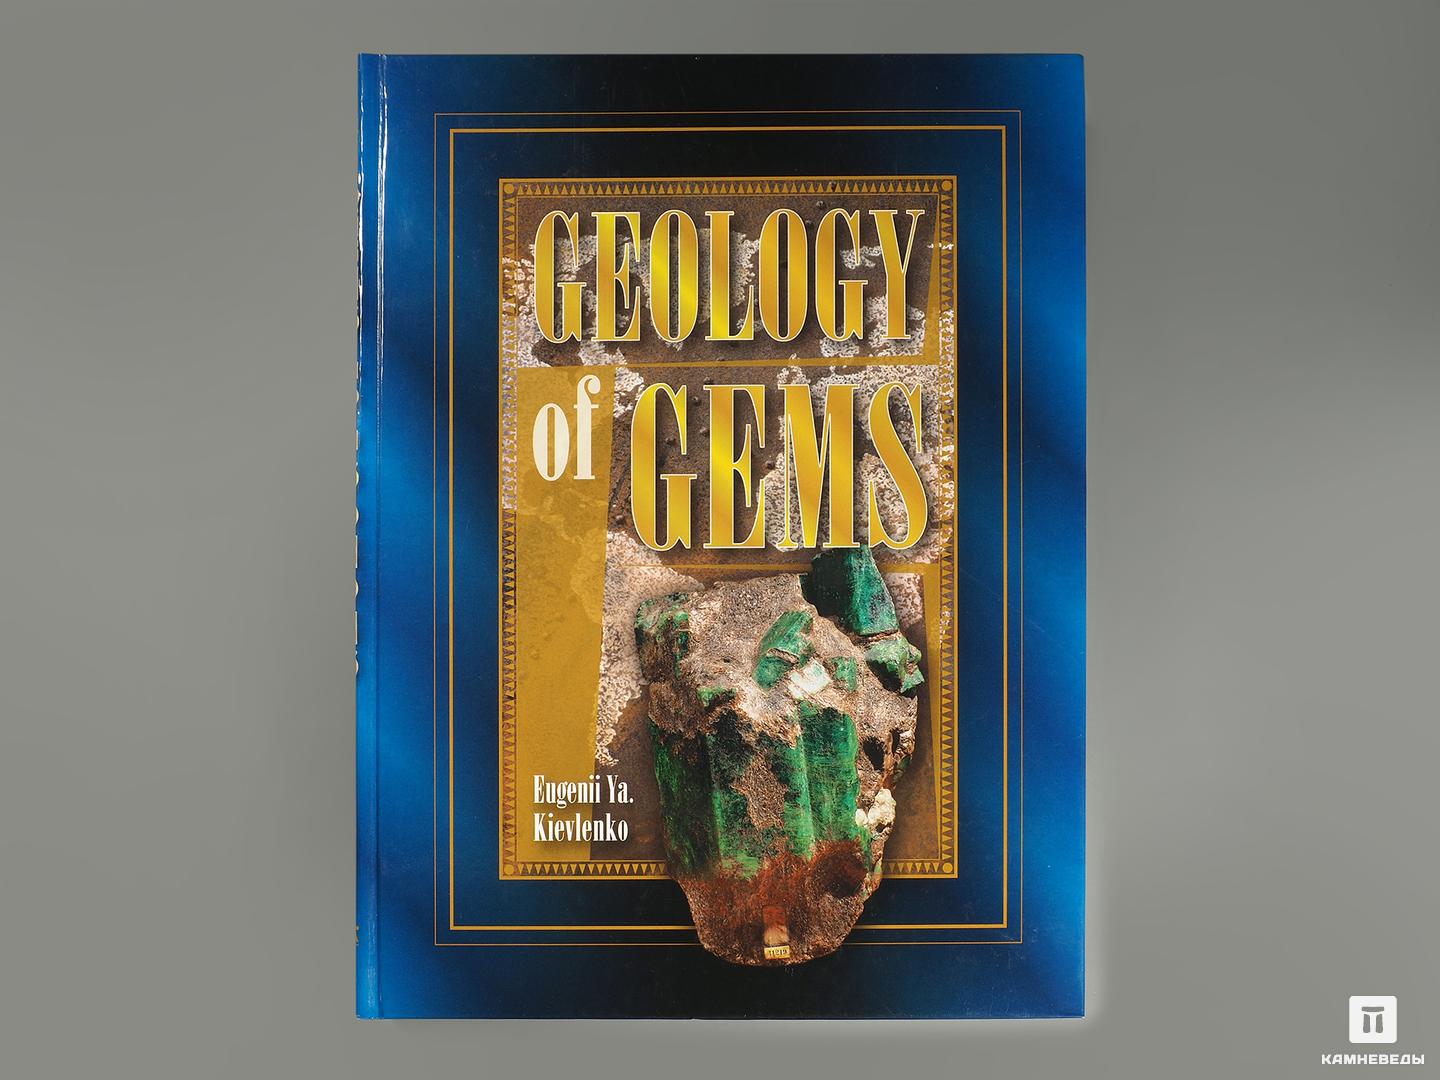 Книга: Eugenii Ya. Kievlenko «Geology of gems» гусеница алина и ее друзья aline caterpillar and her friends на английском языке